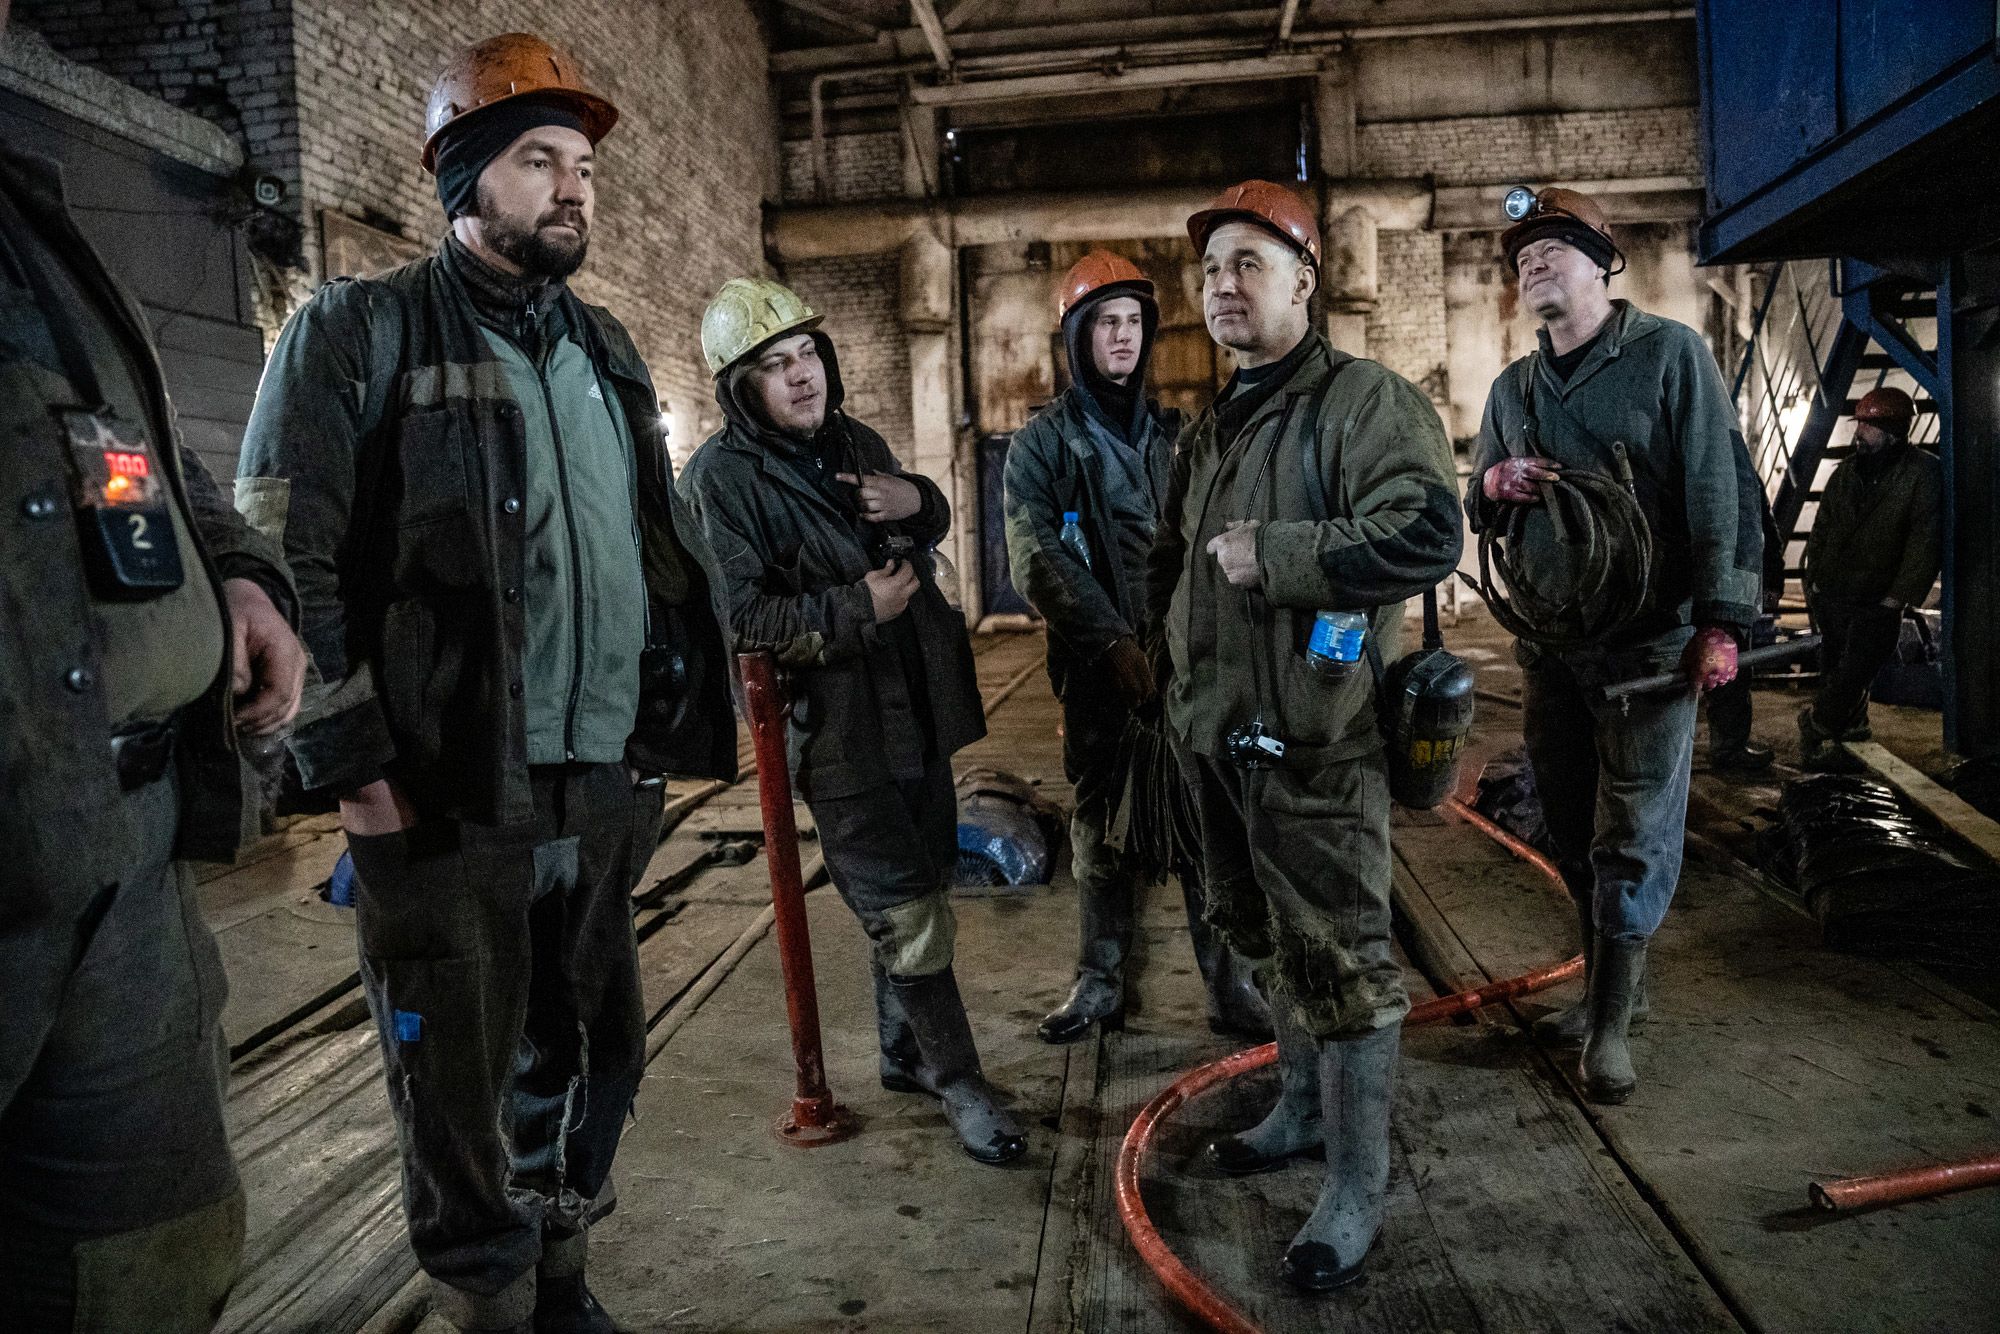 Environmental Effect of Coal Mine Deterioration in Eastern Ukraine